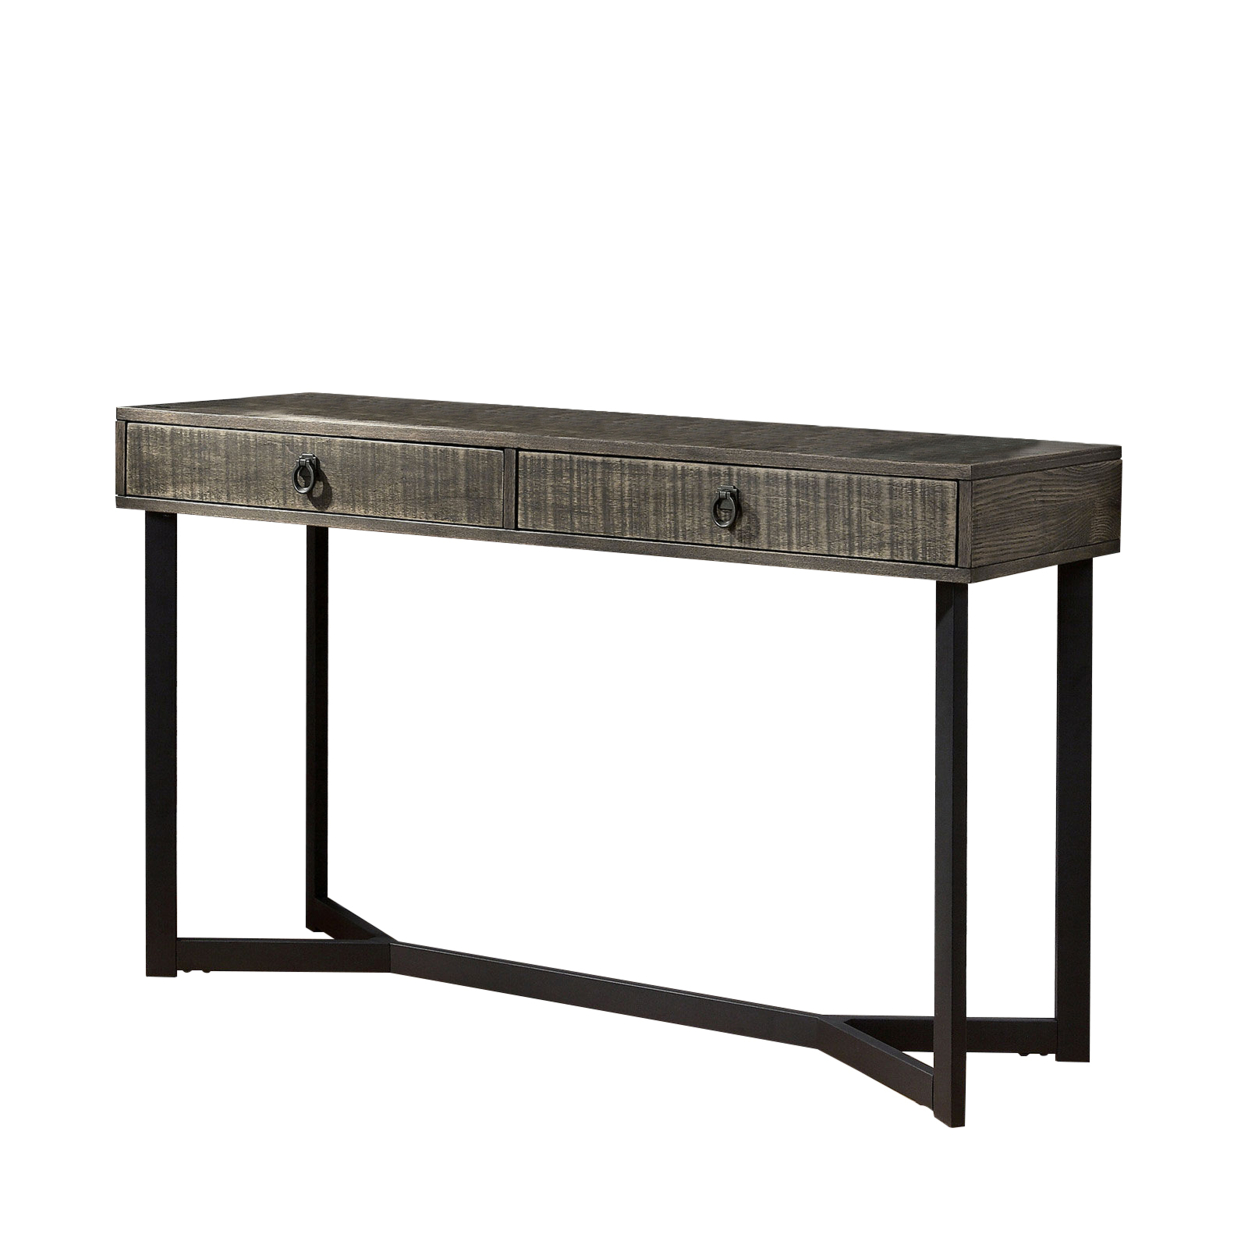 Rectangular Wooden Sofa Table With Metal Powder Coated Base, Gray And Black- Saltoro Sherpi